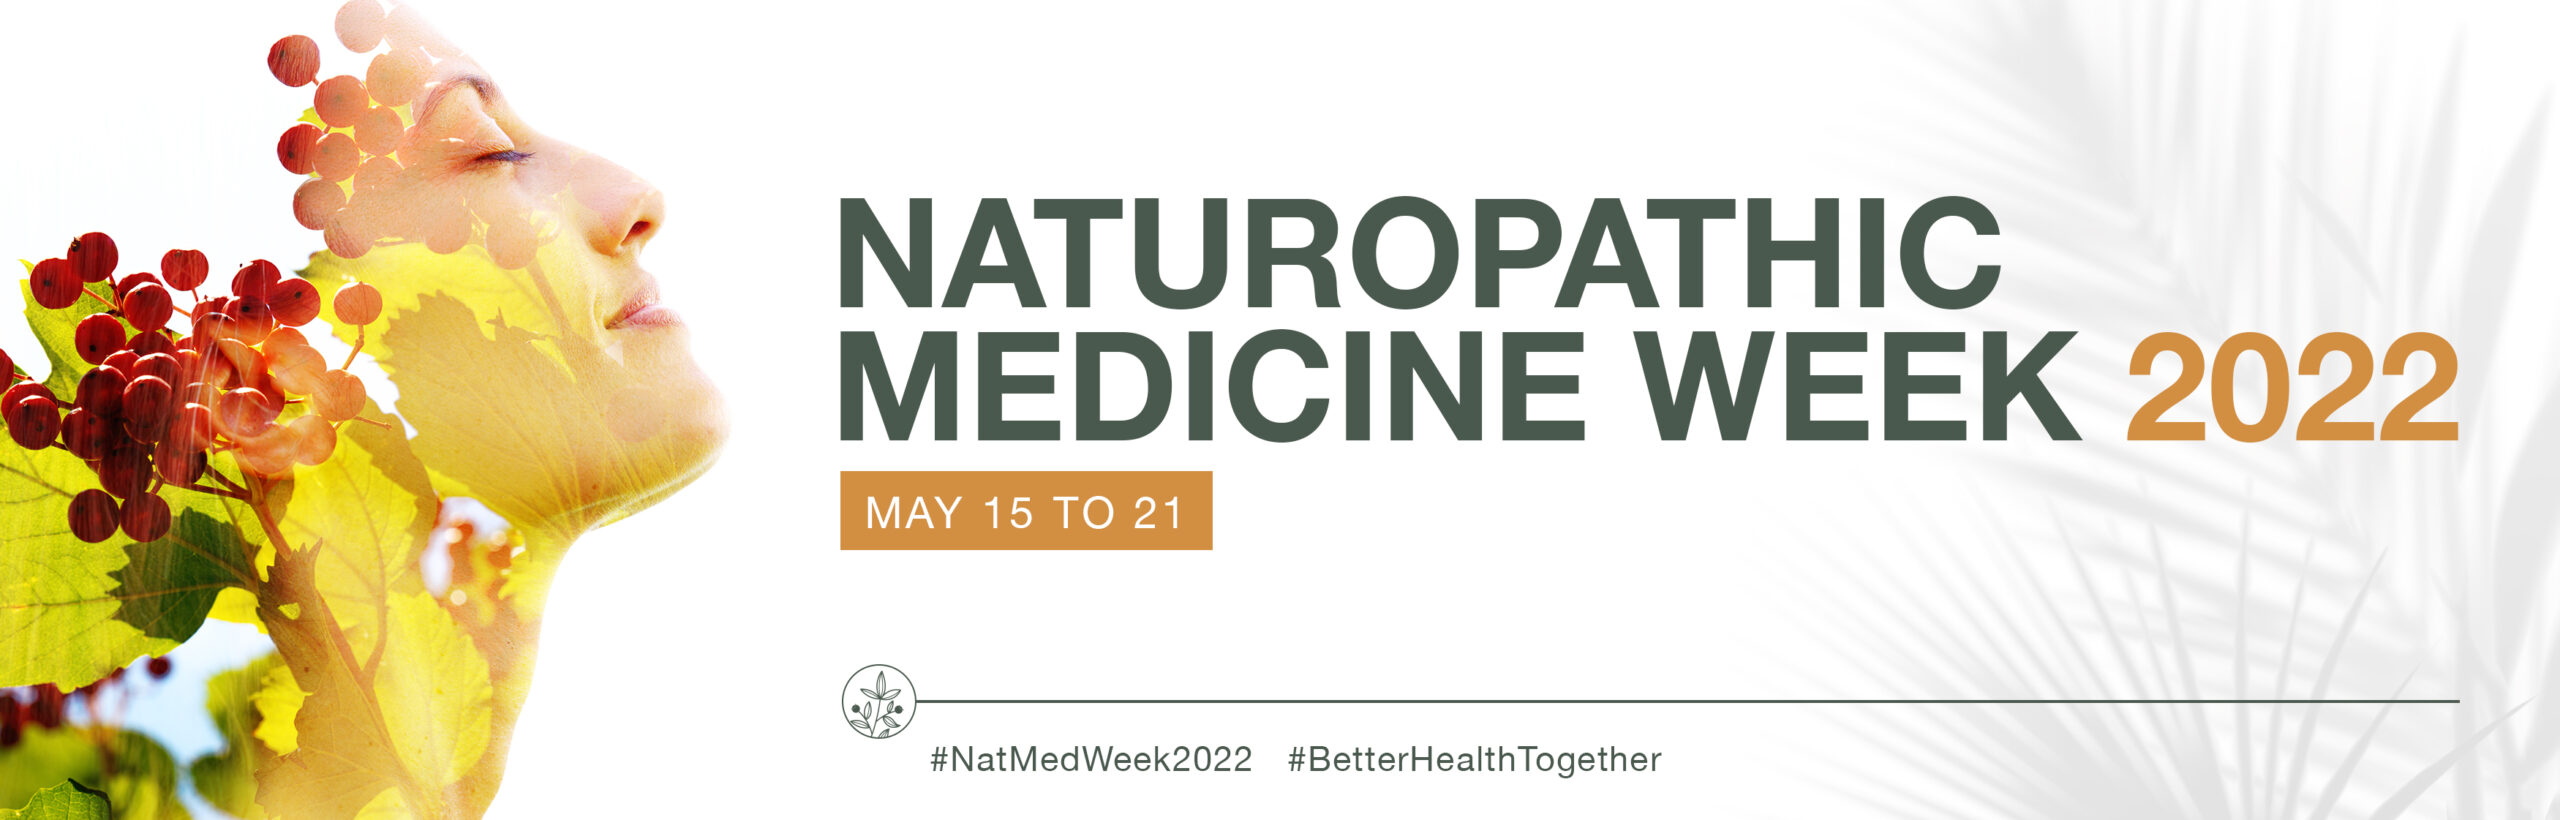 naturopathic medicine week 2022